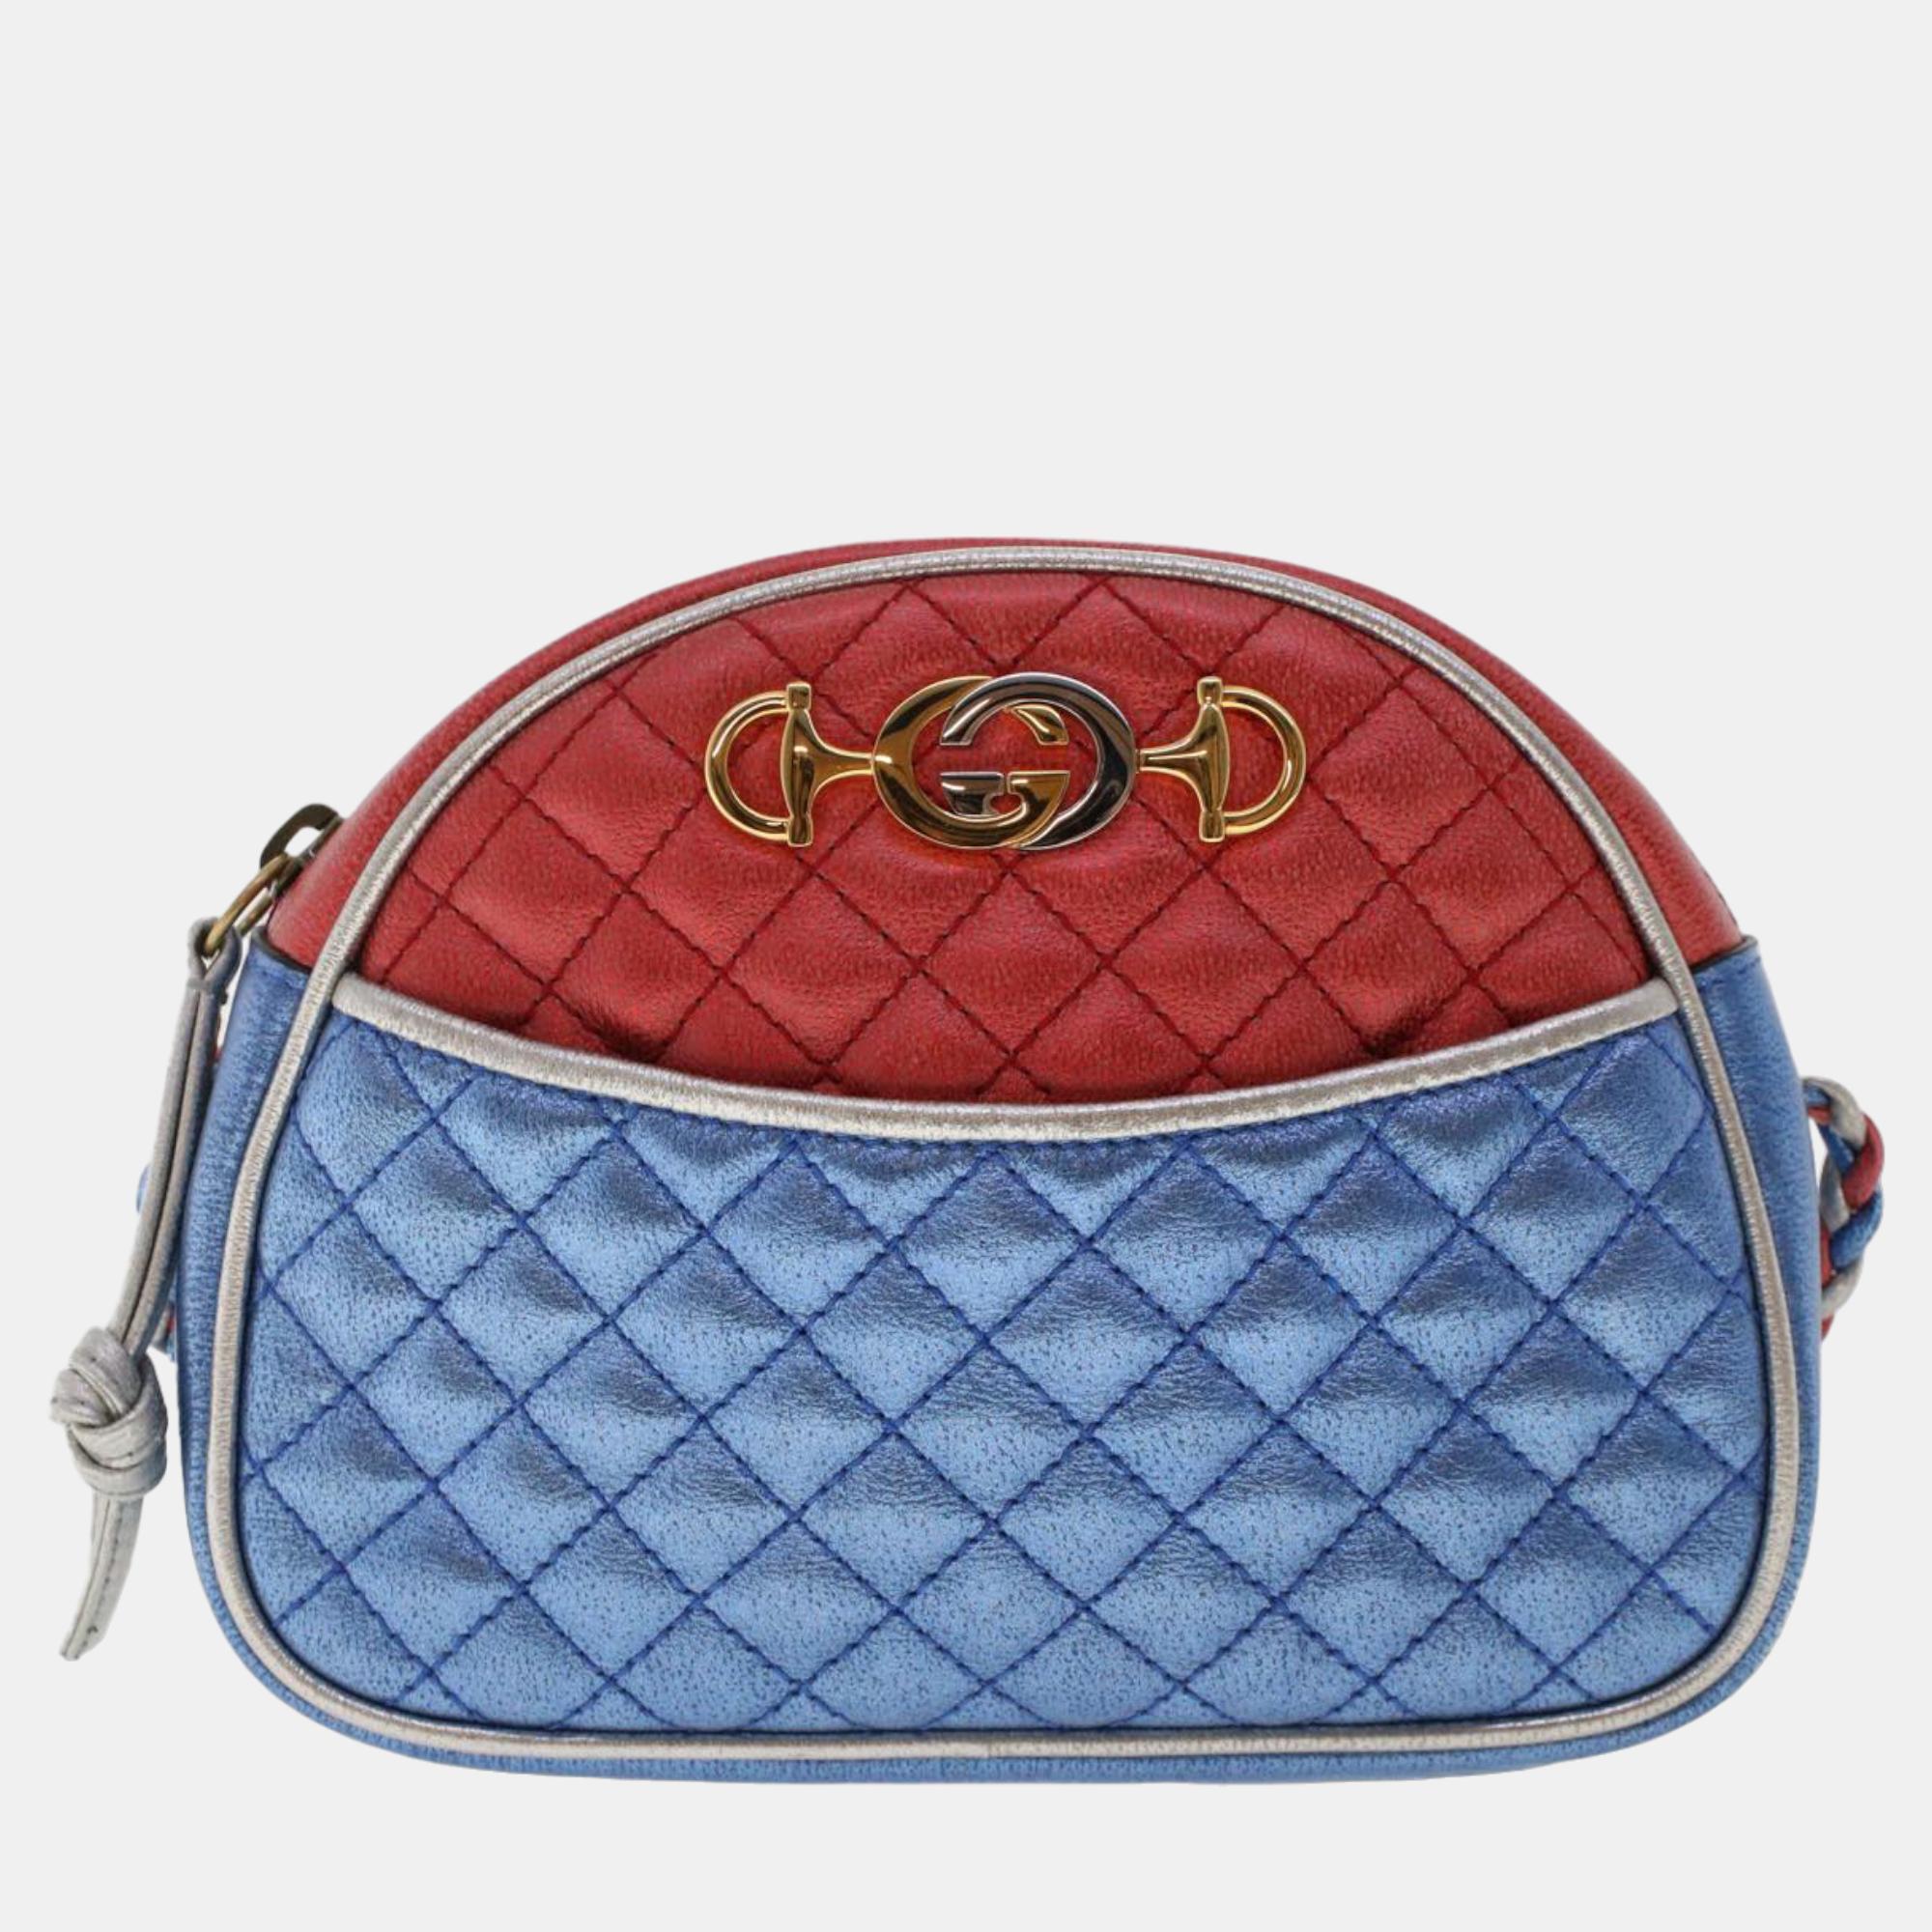 Gucci Blue Leather Horsebit Shoulder Bag